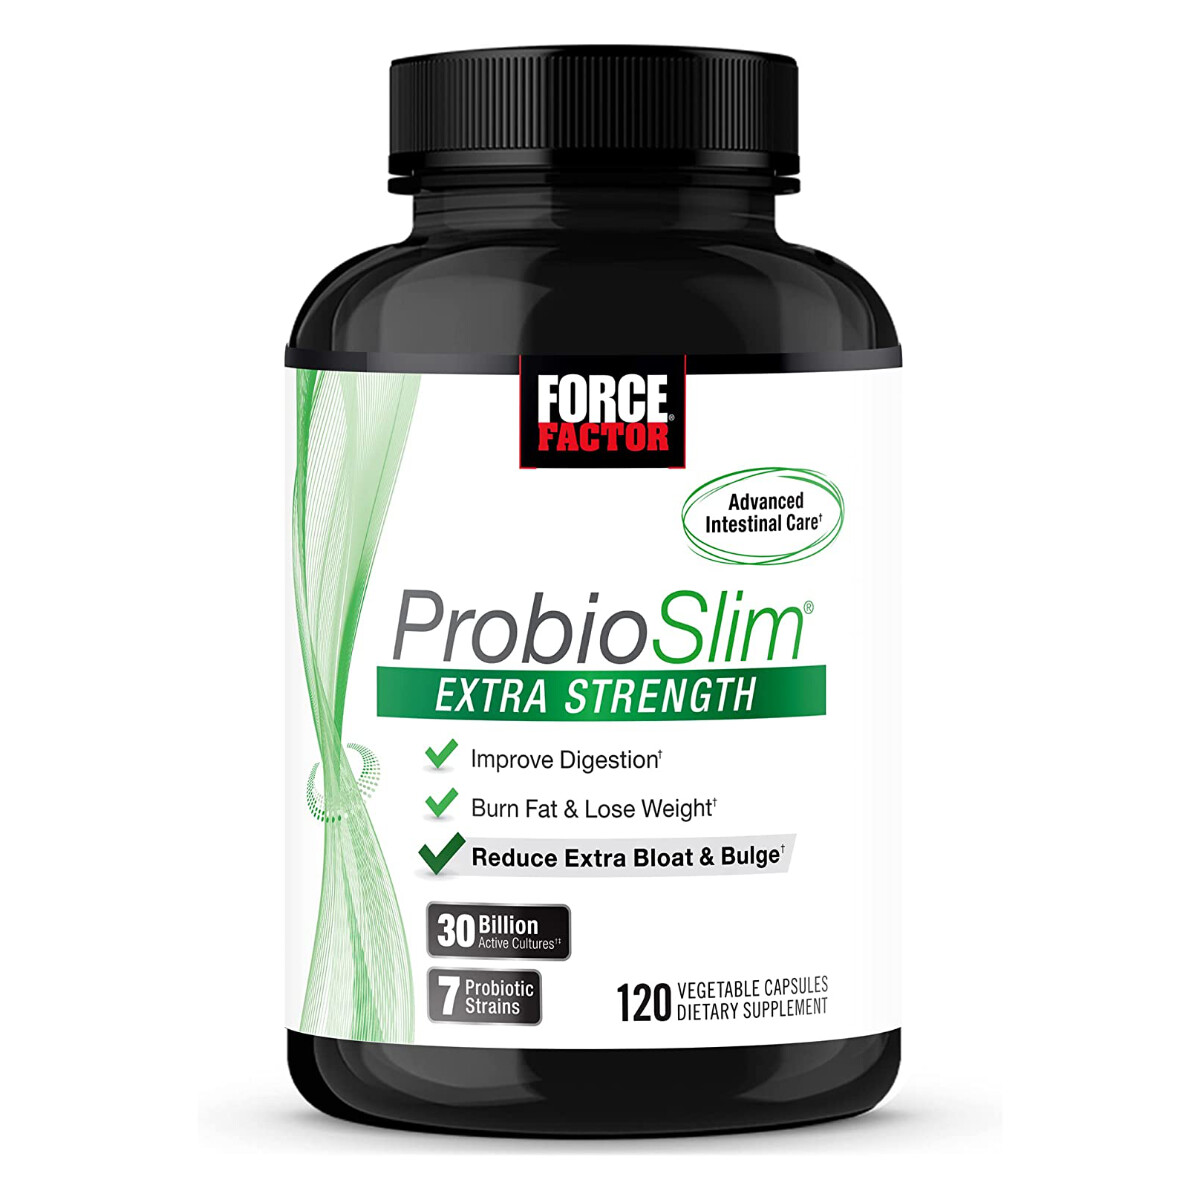 ProbioSlim Extra Strength Probiotic Supplement for Women and Men (120 capsules)